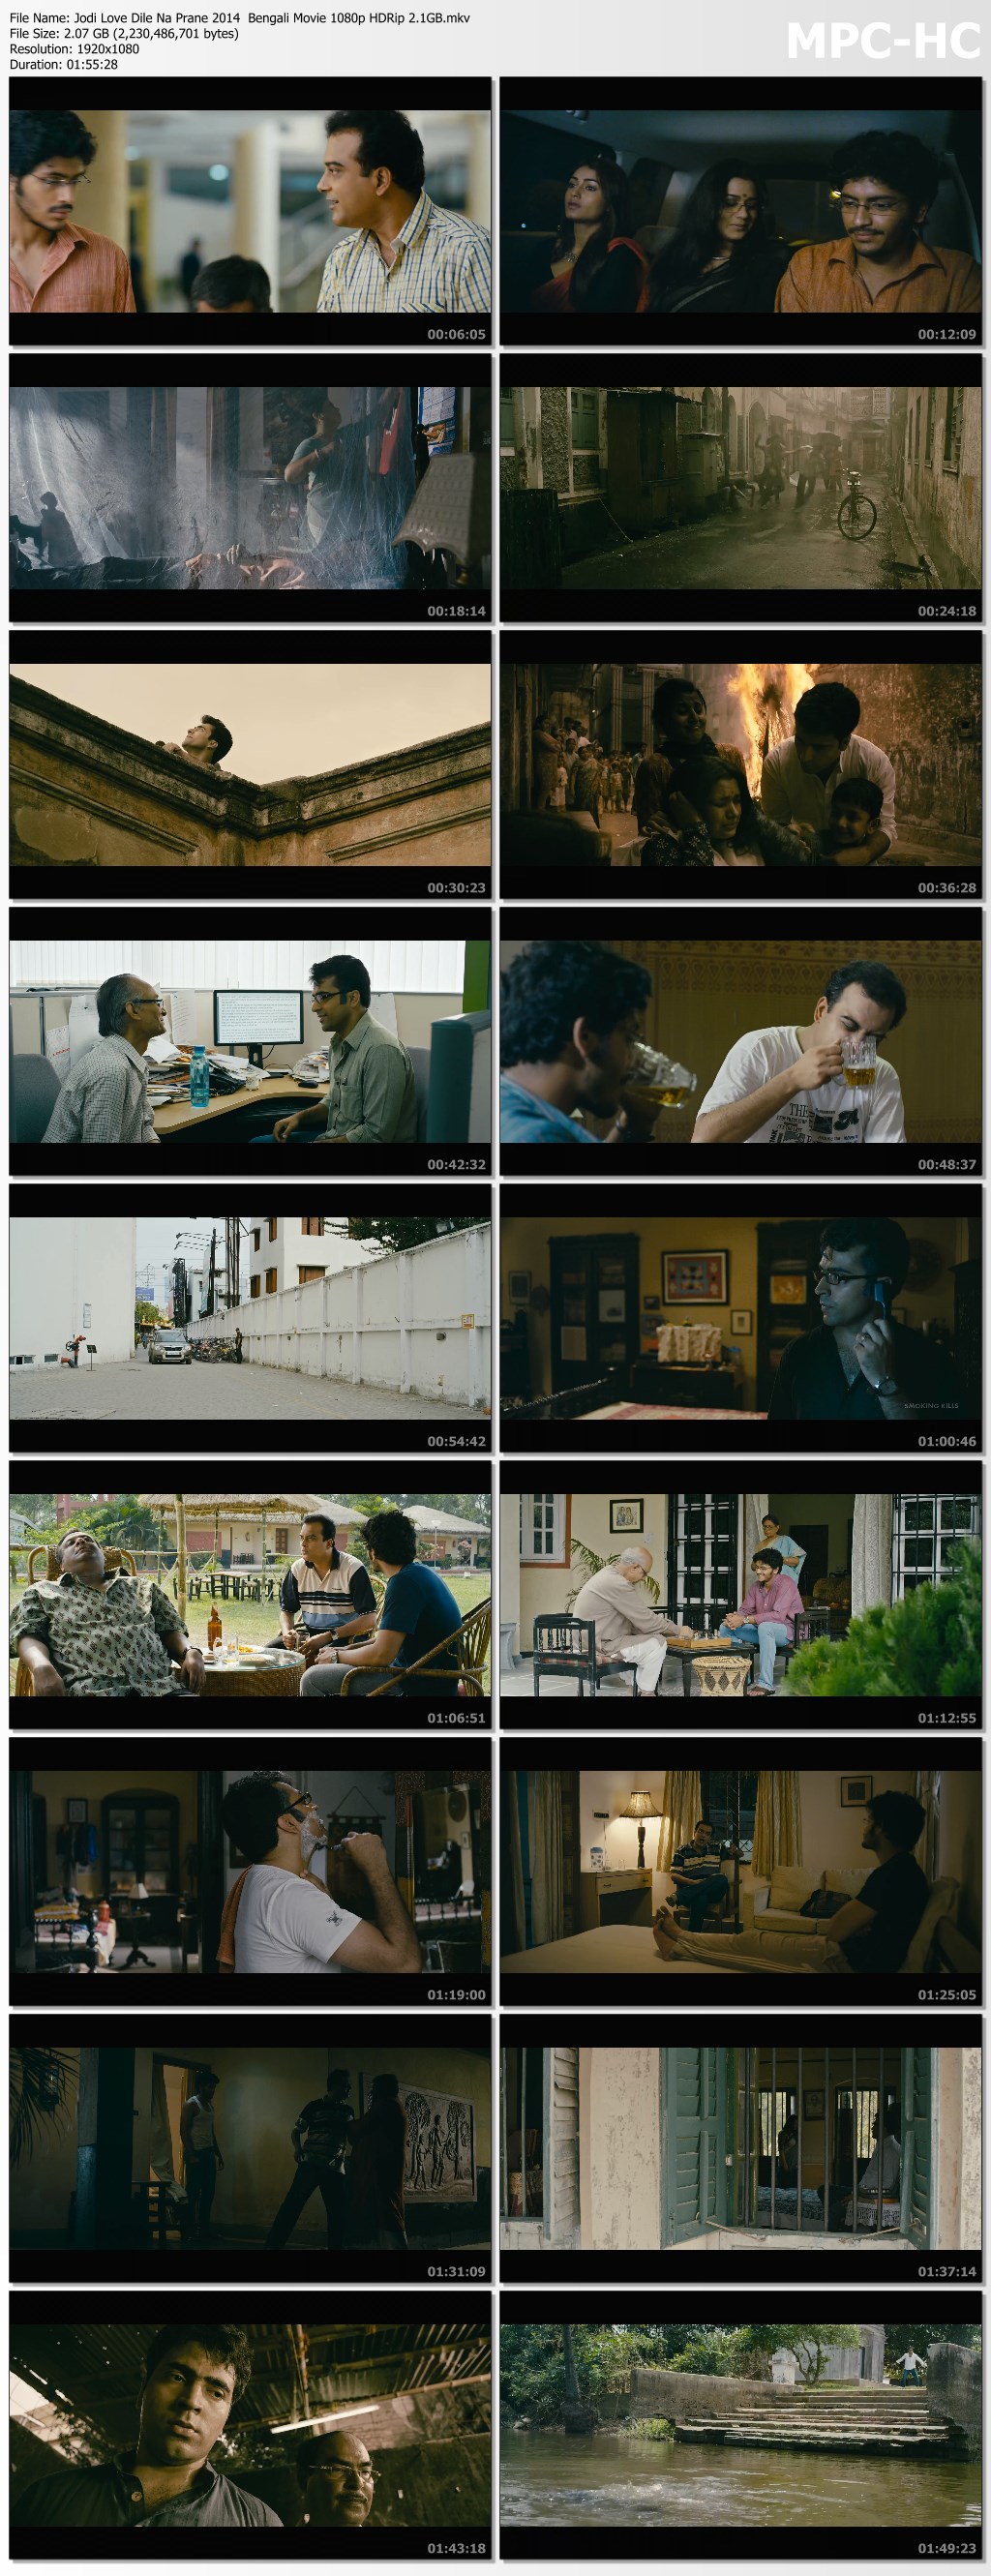 Jodi-Love-Dile-Na-Prane-2014-Bengali-Movie-1080p-HDRip-2.1GB.mkv_thumbs.jpg